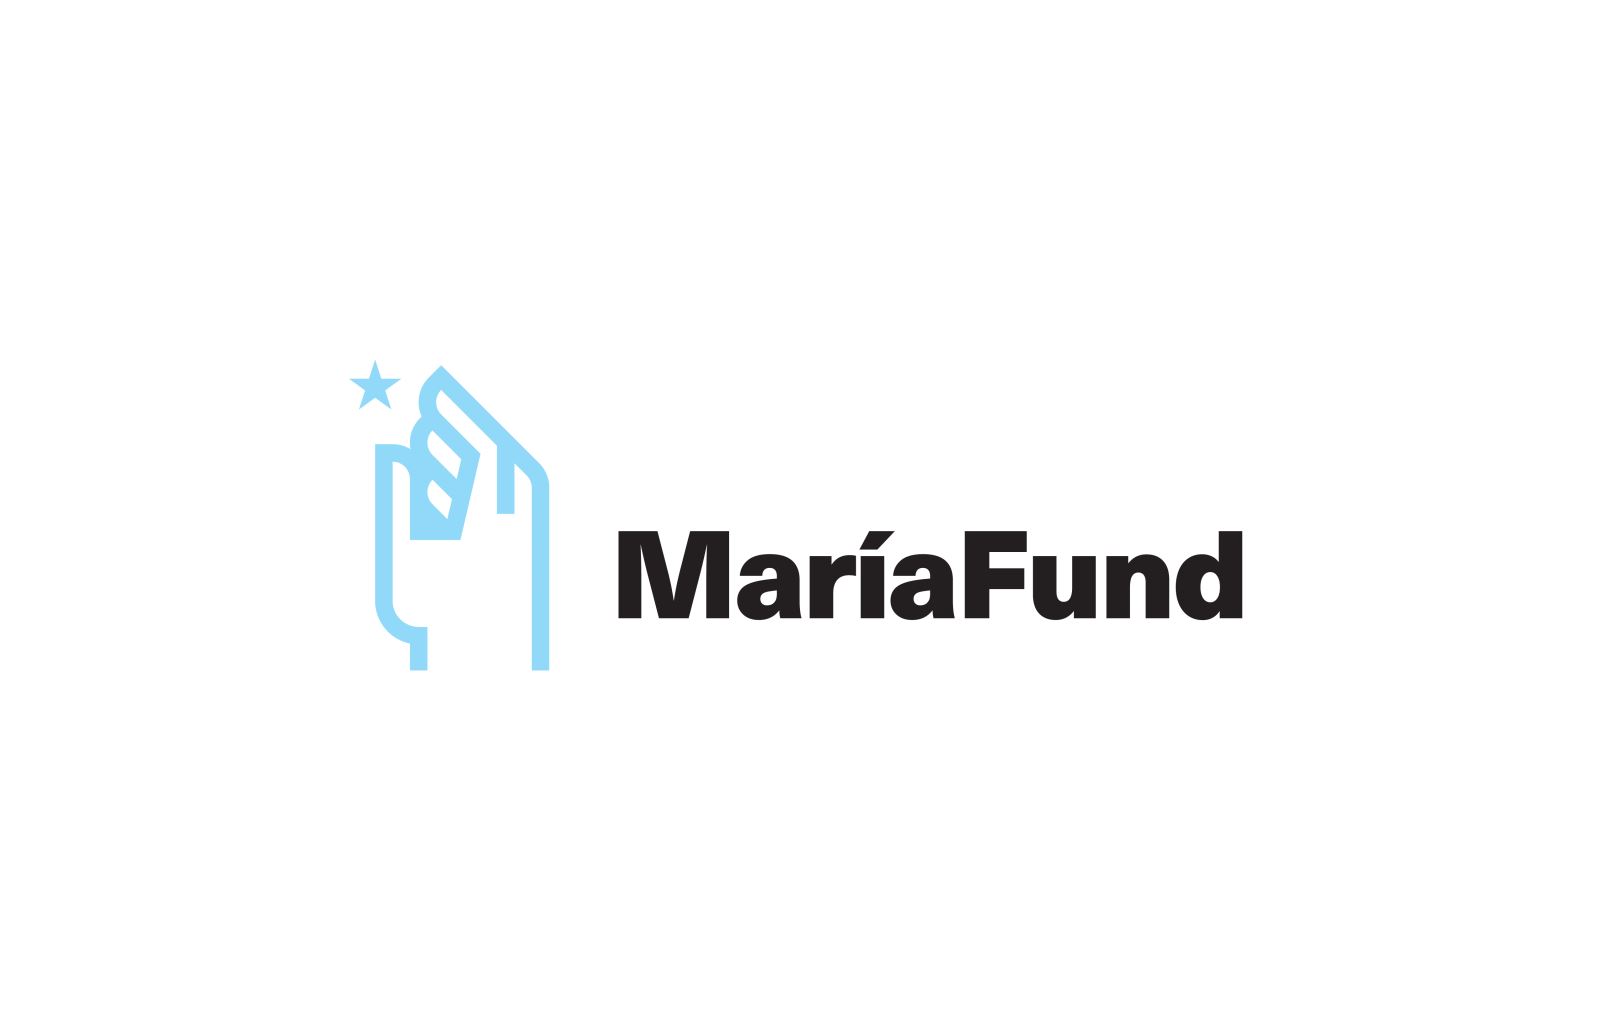 Hurricane Maria Community Recovery Fund